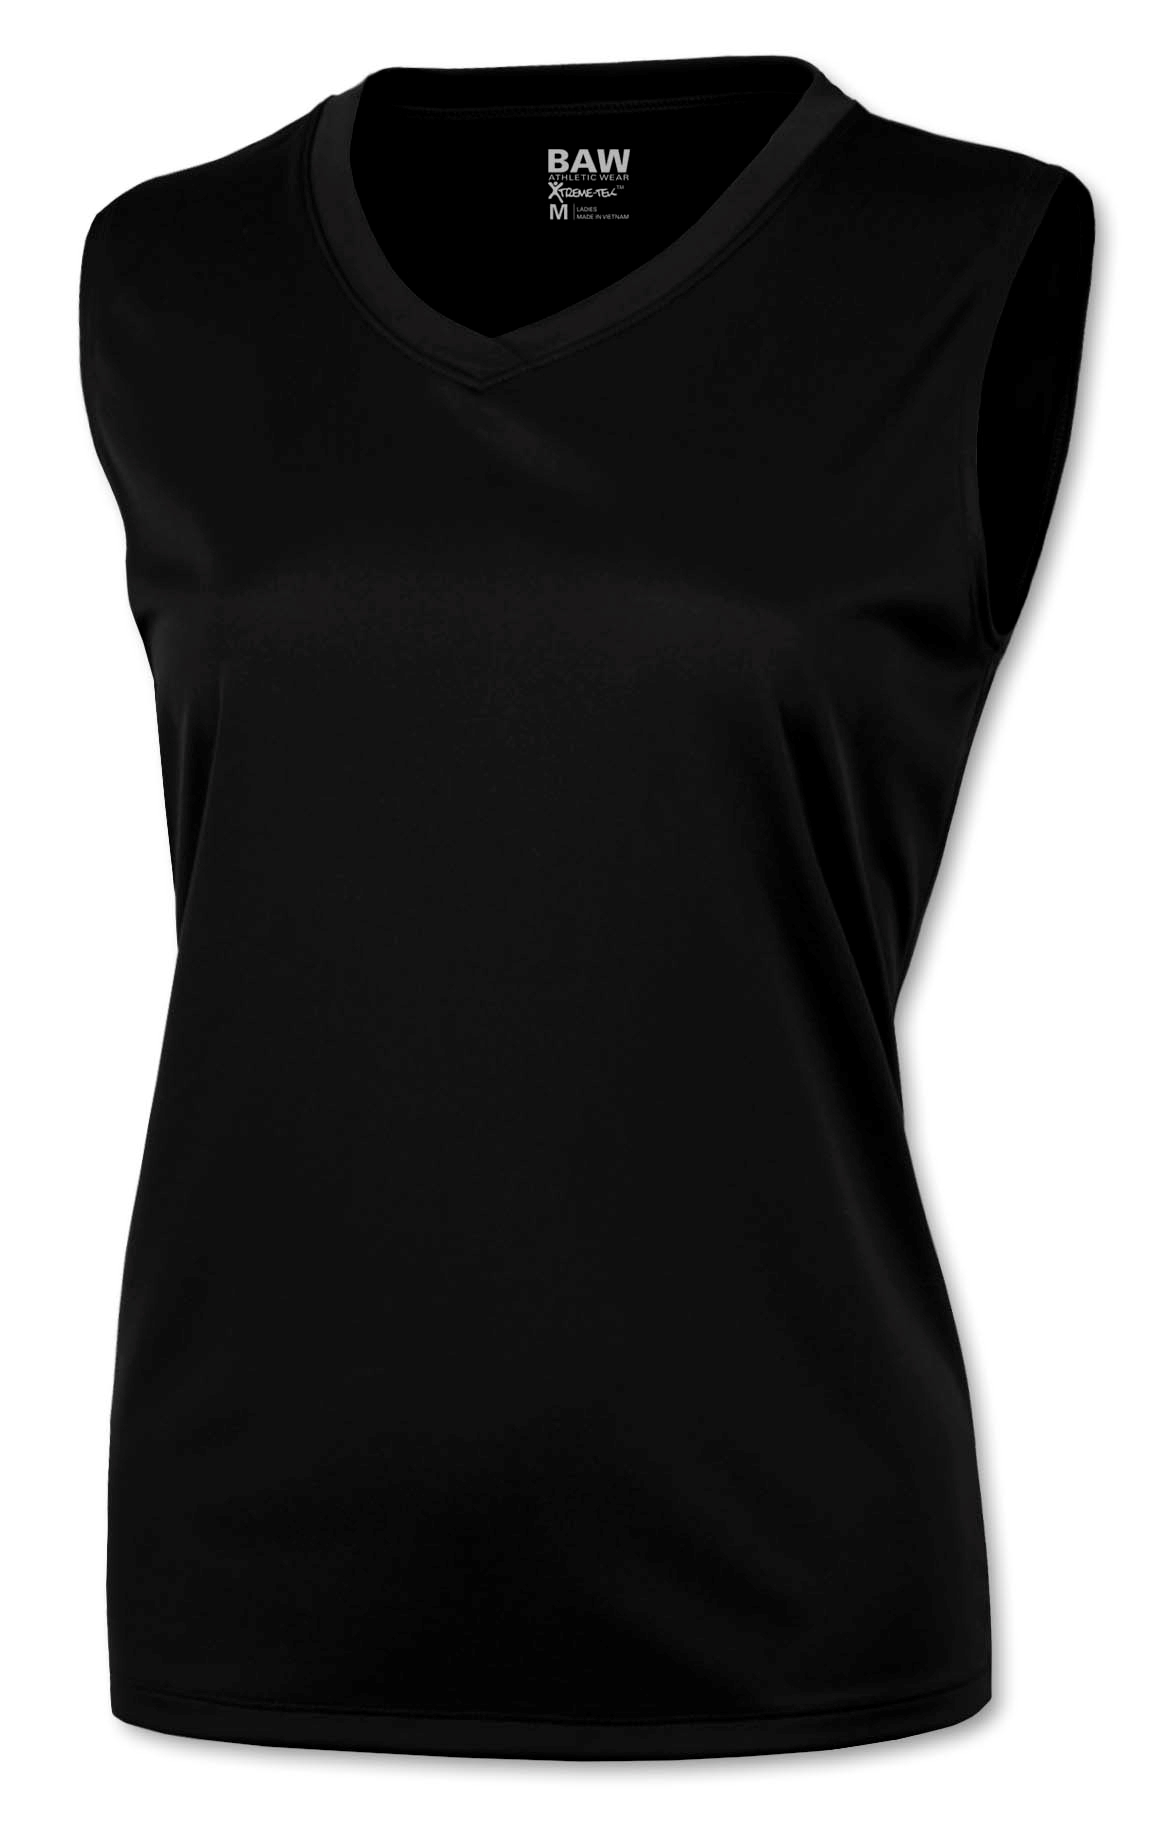 BAW Athletic Wear XT37 - Ladies XT Sleeveless